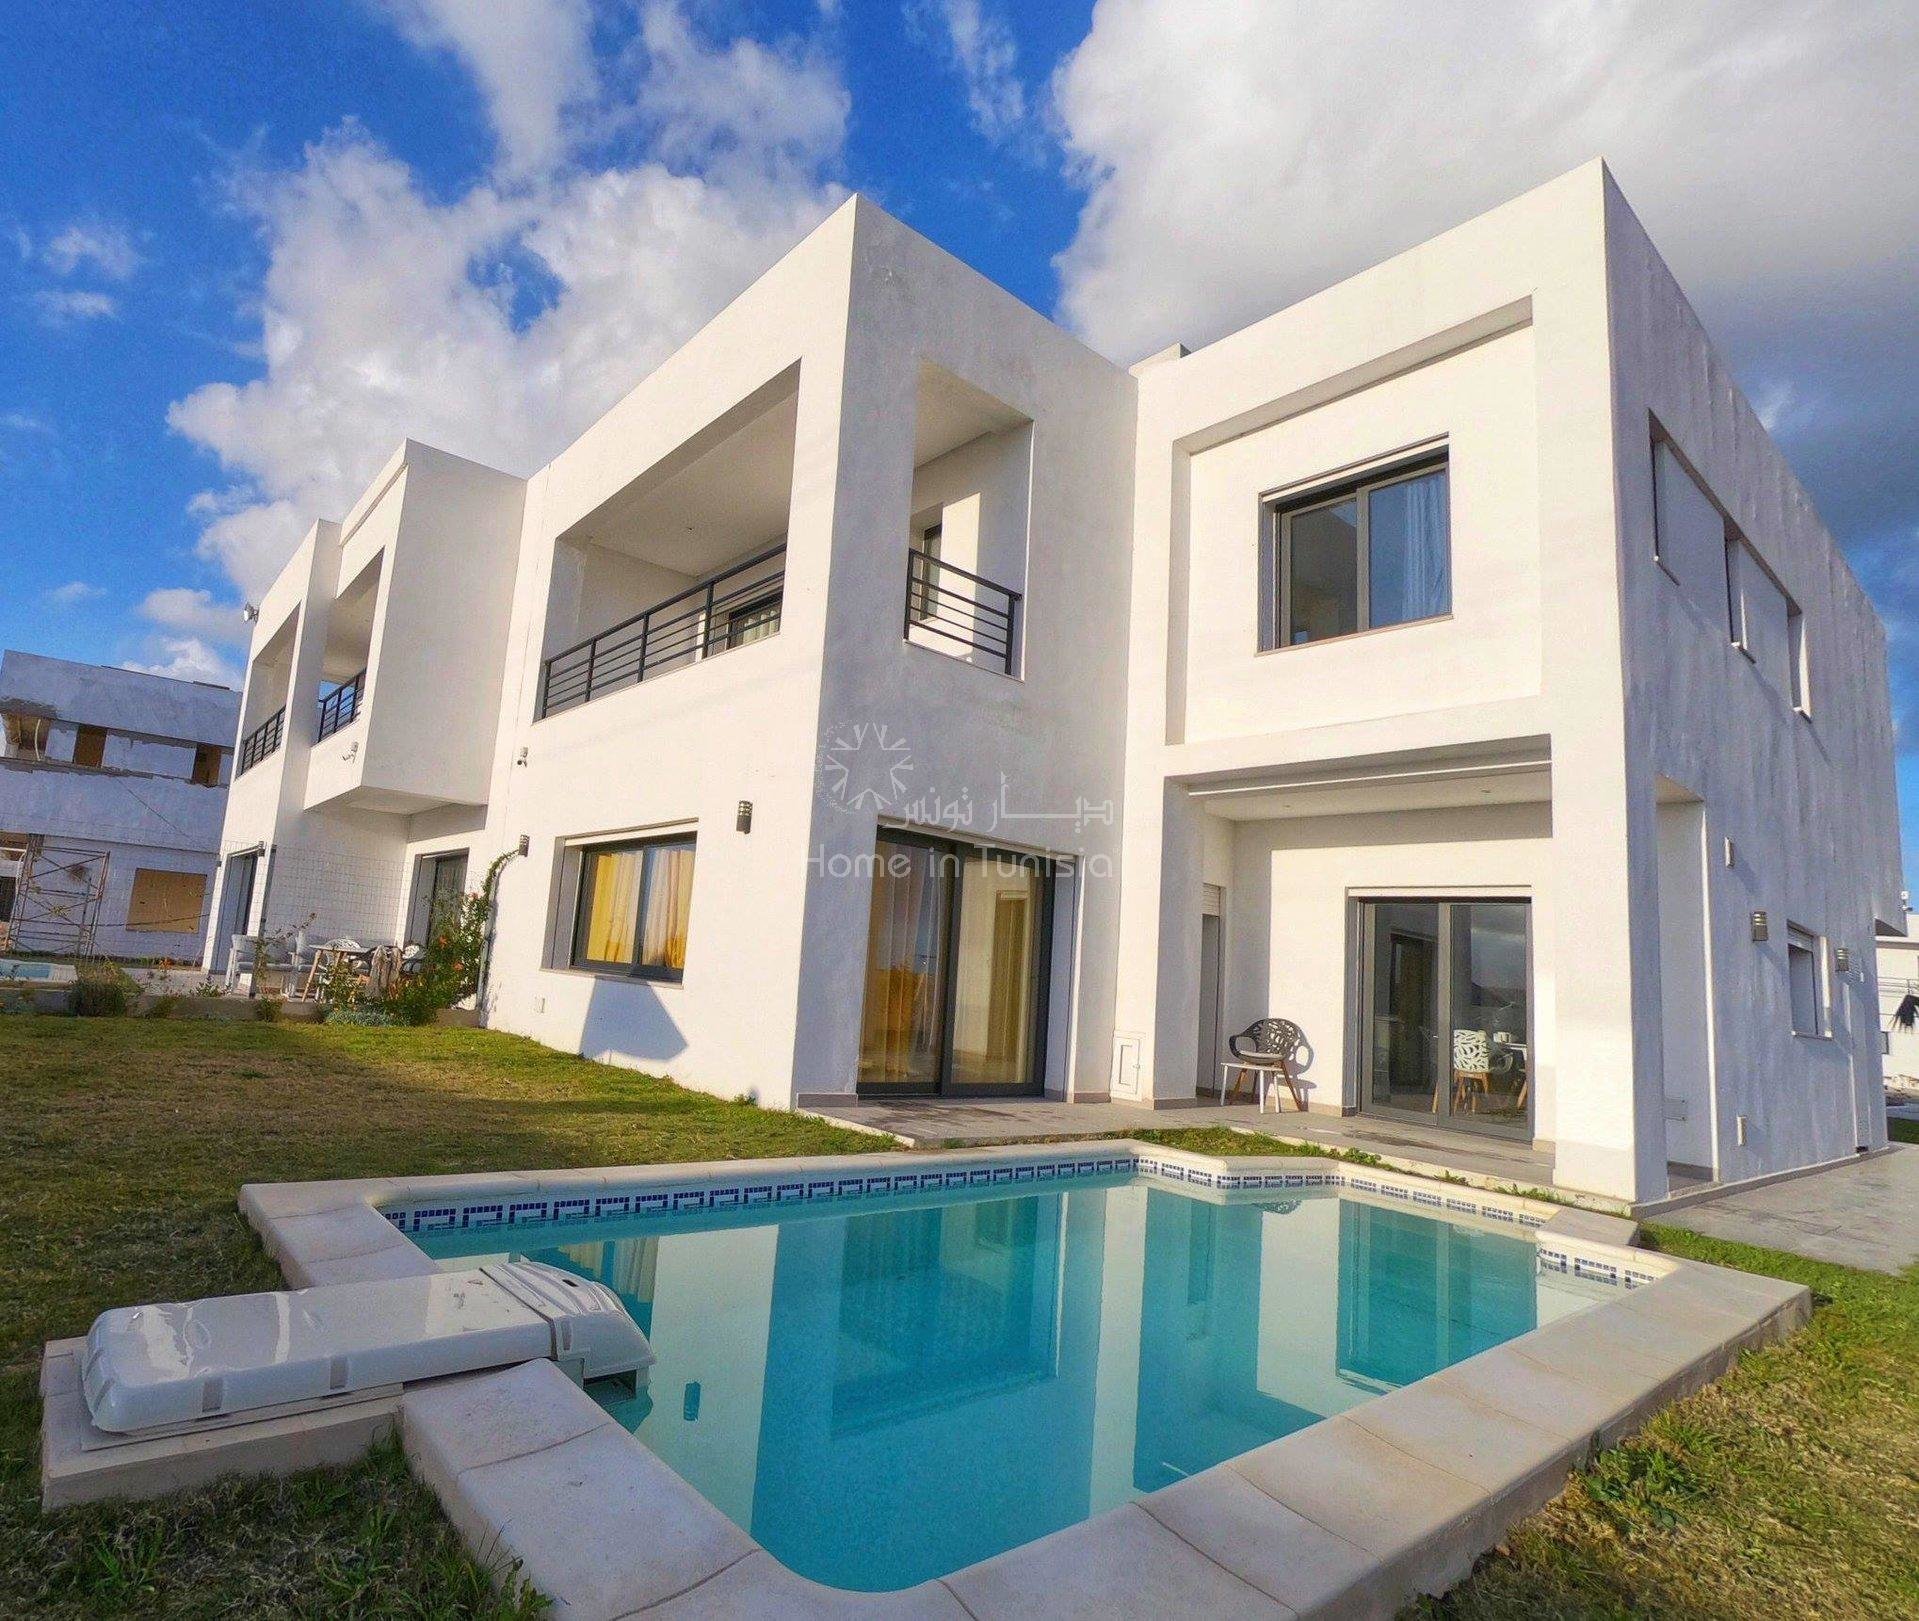 Villa golf jumelée neuve de 327.35 m2 avec 4 chambres terrasse jardin piscine